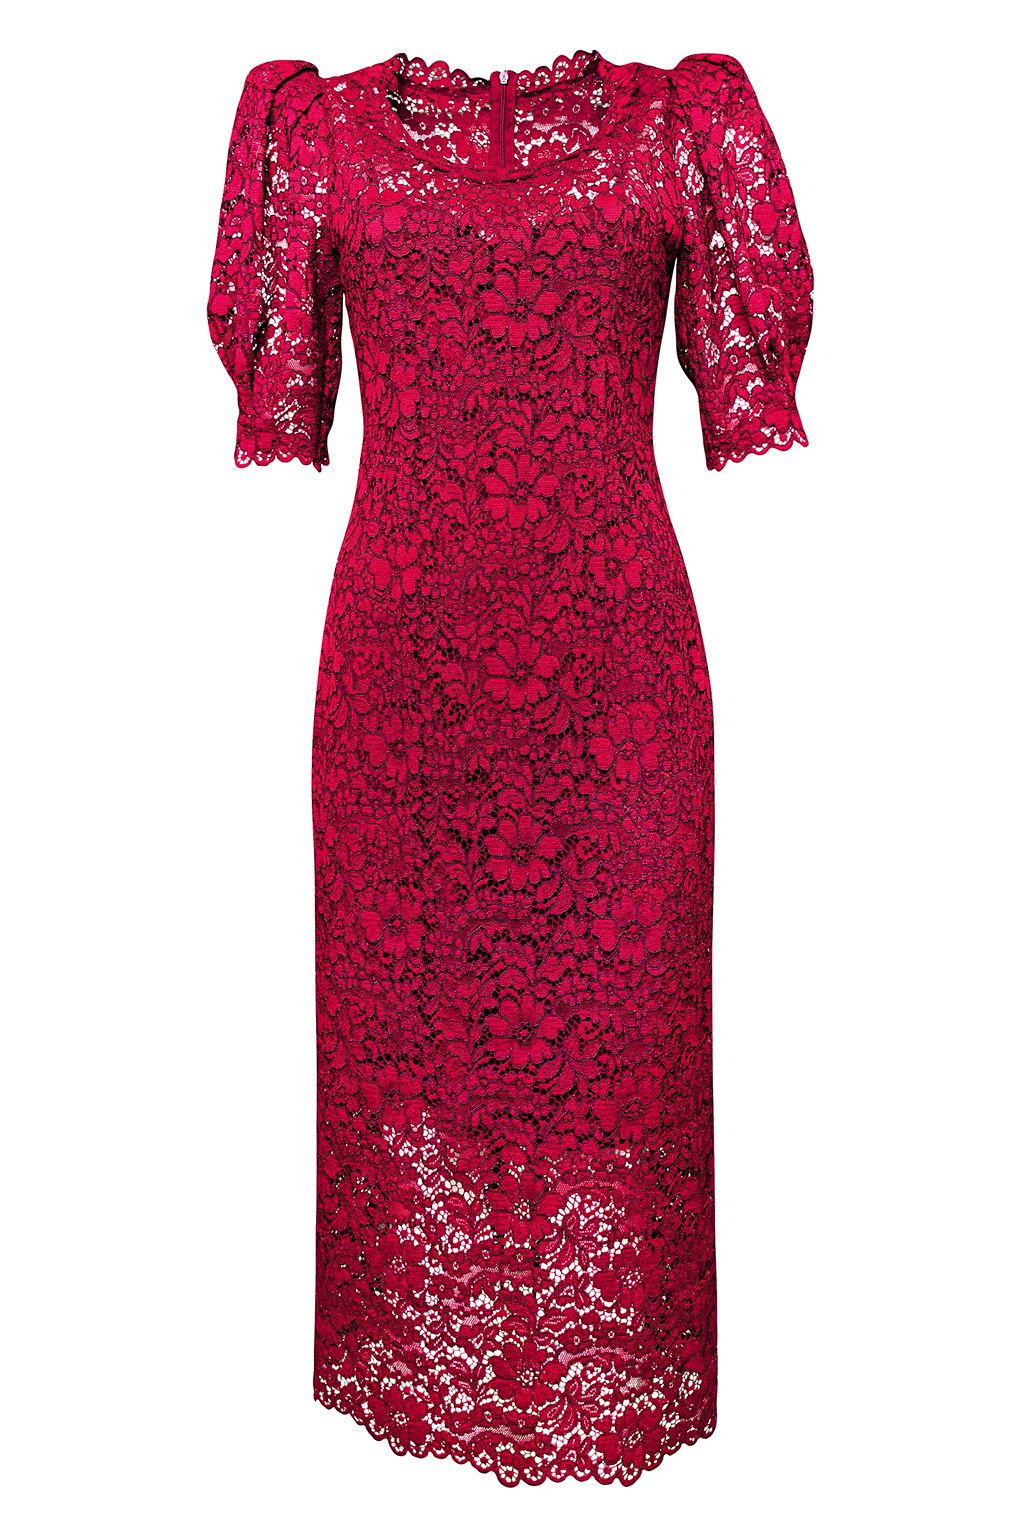 Платье женское PAOLA RAY PR121-3025 розовое M